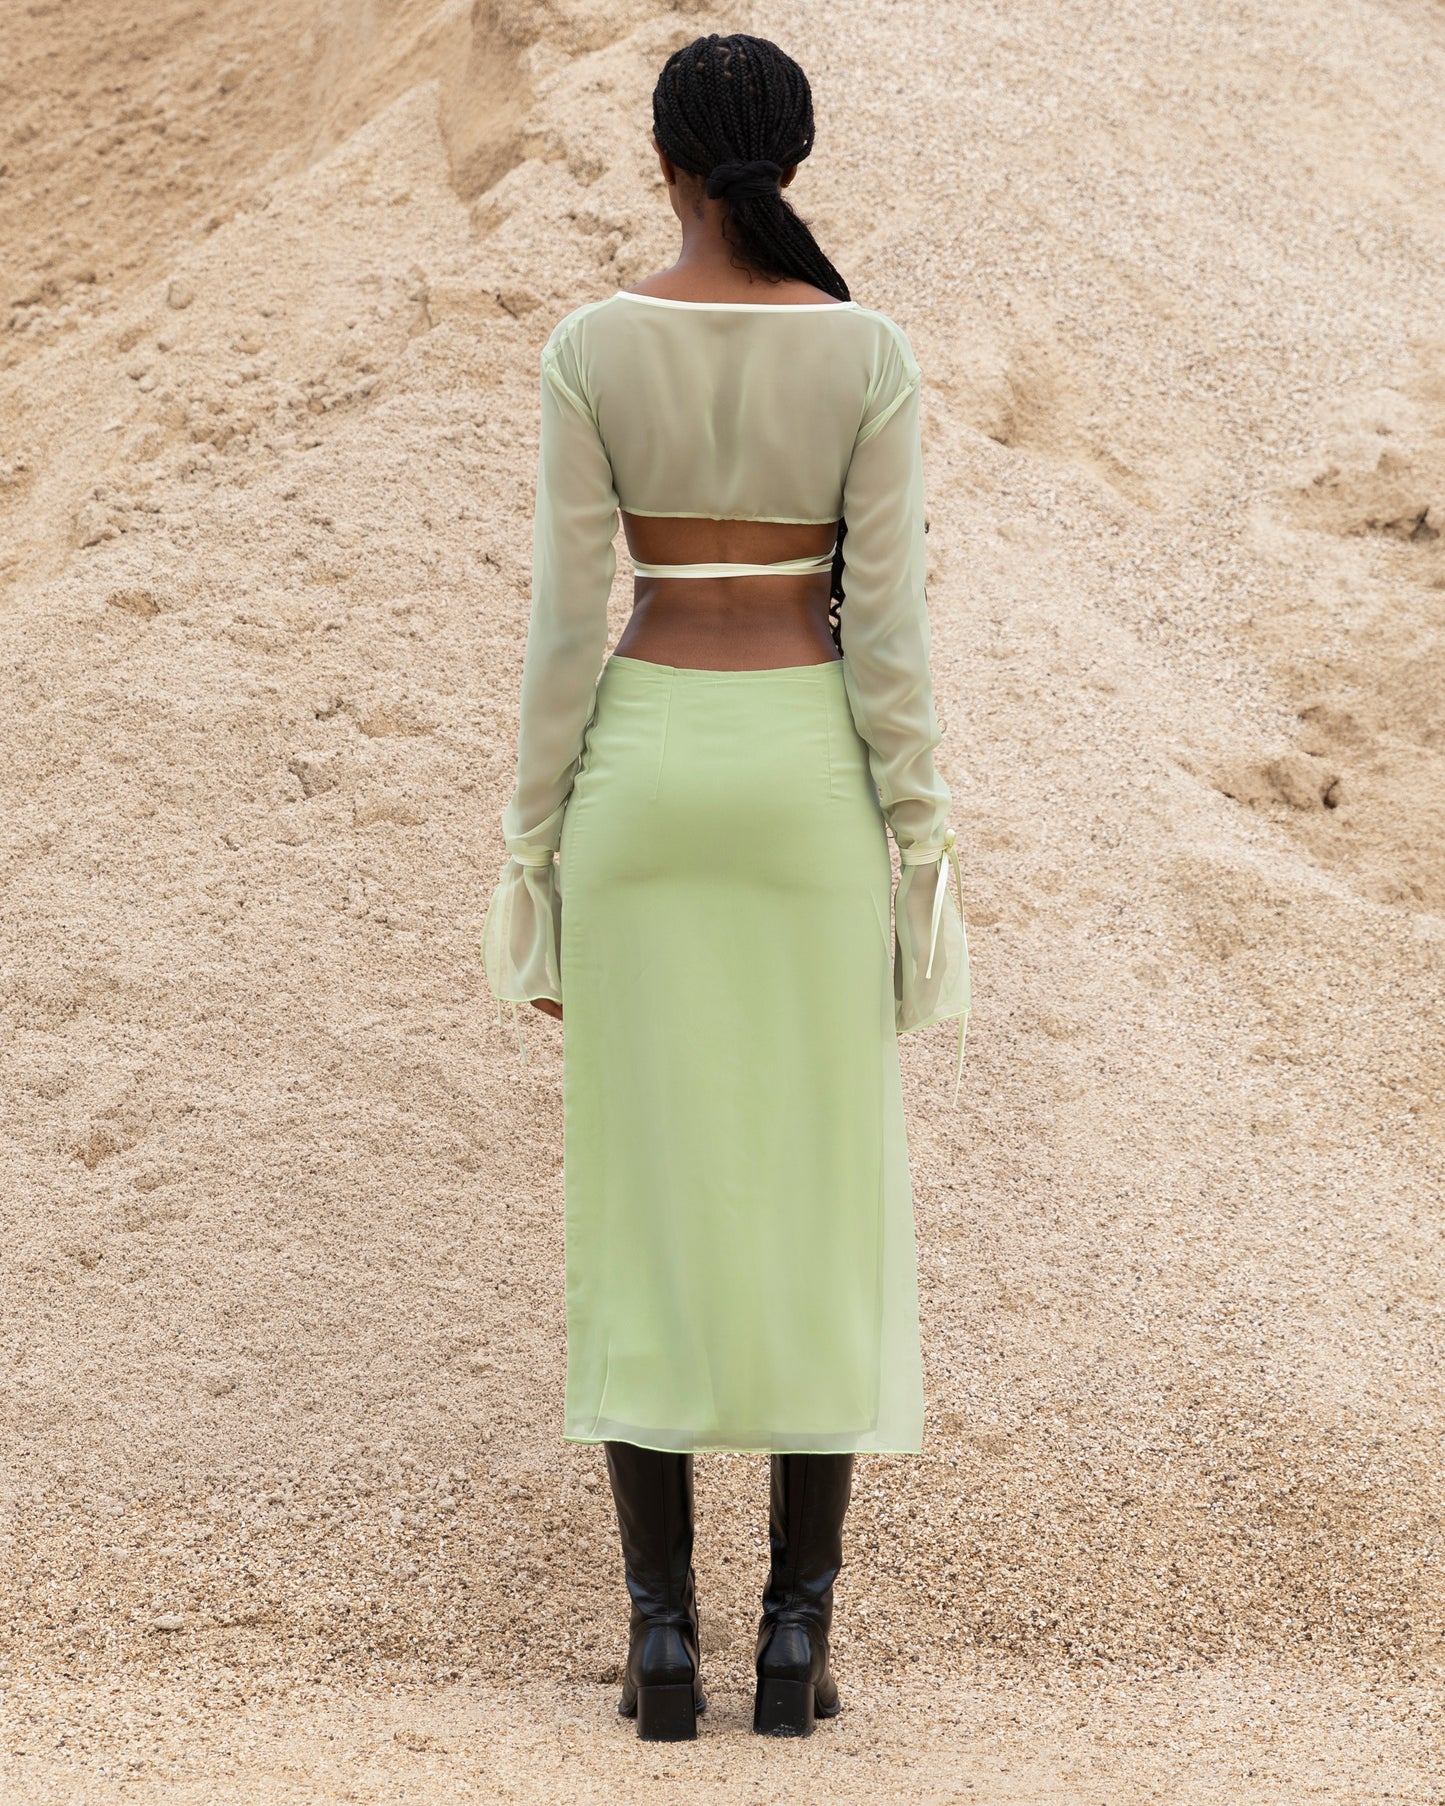 Venus Skirt